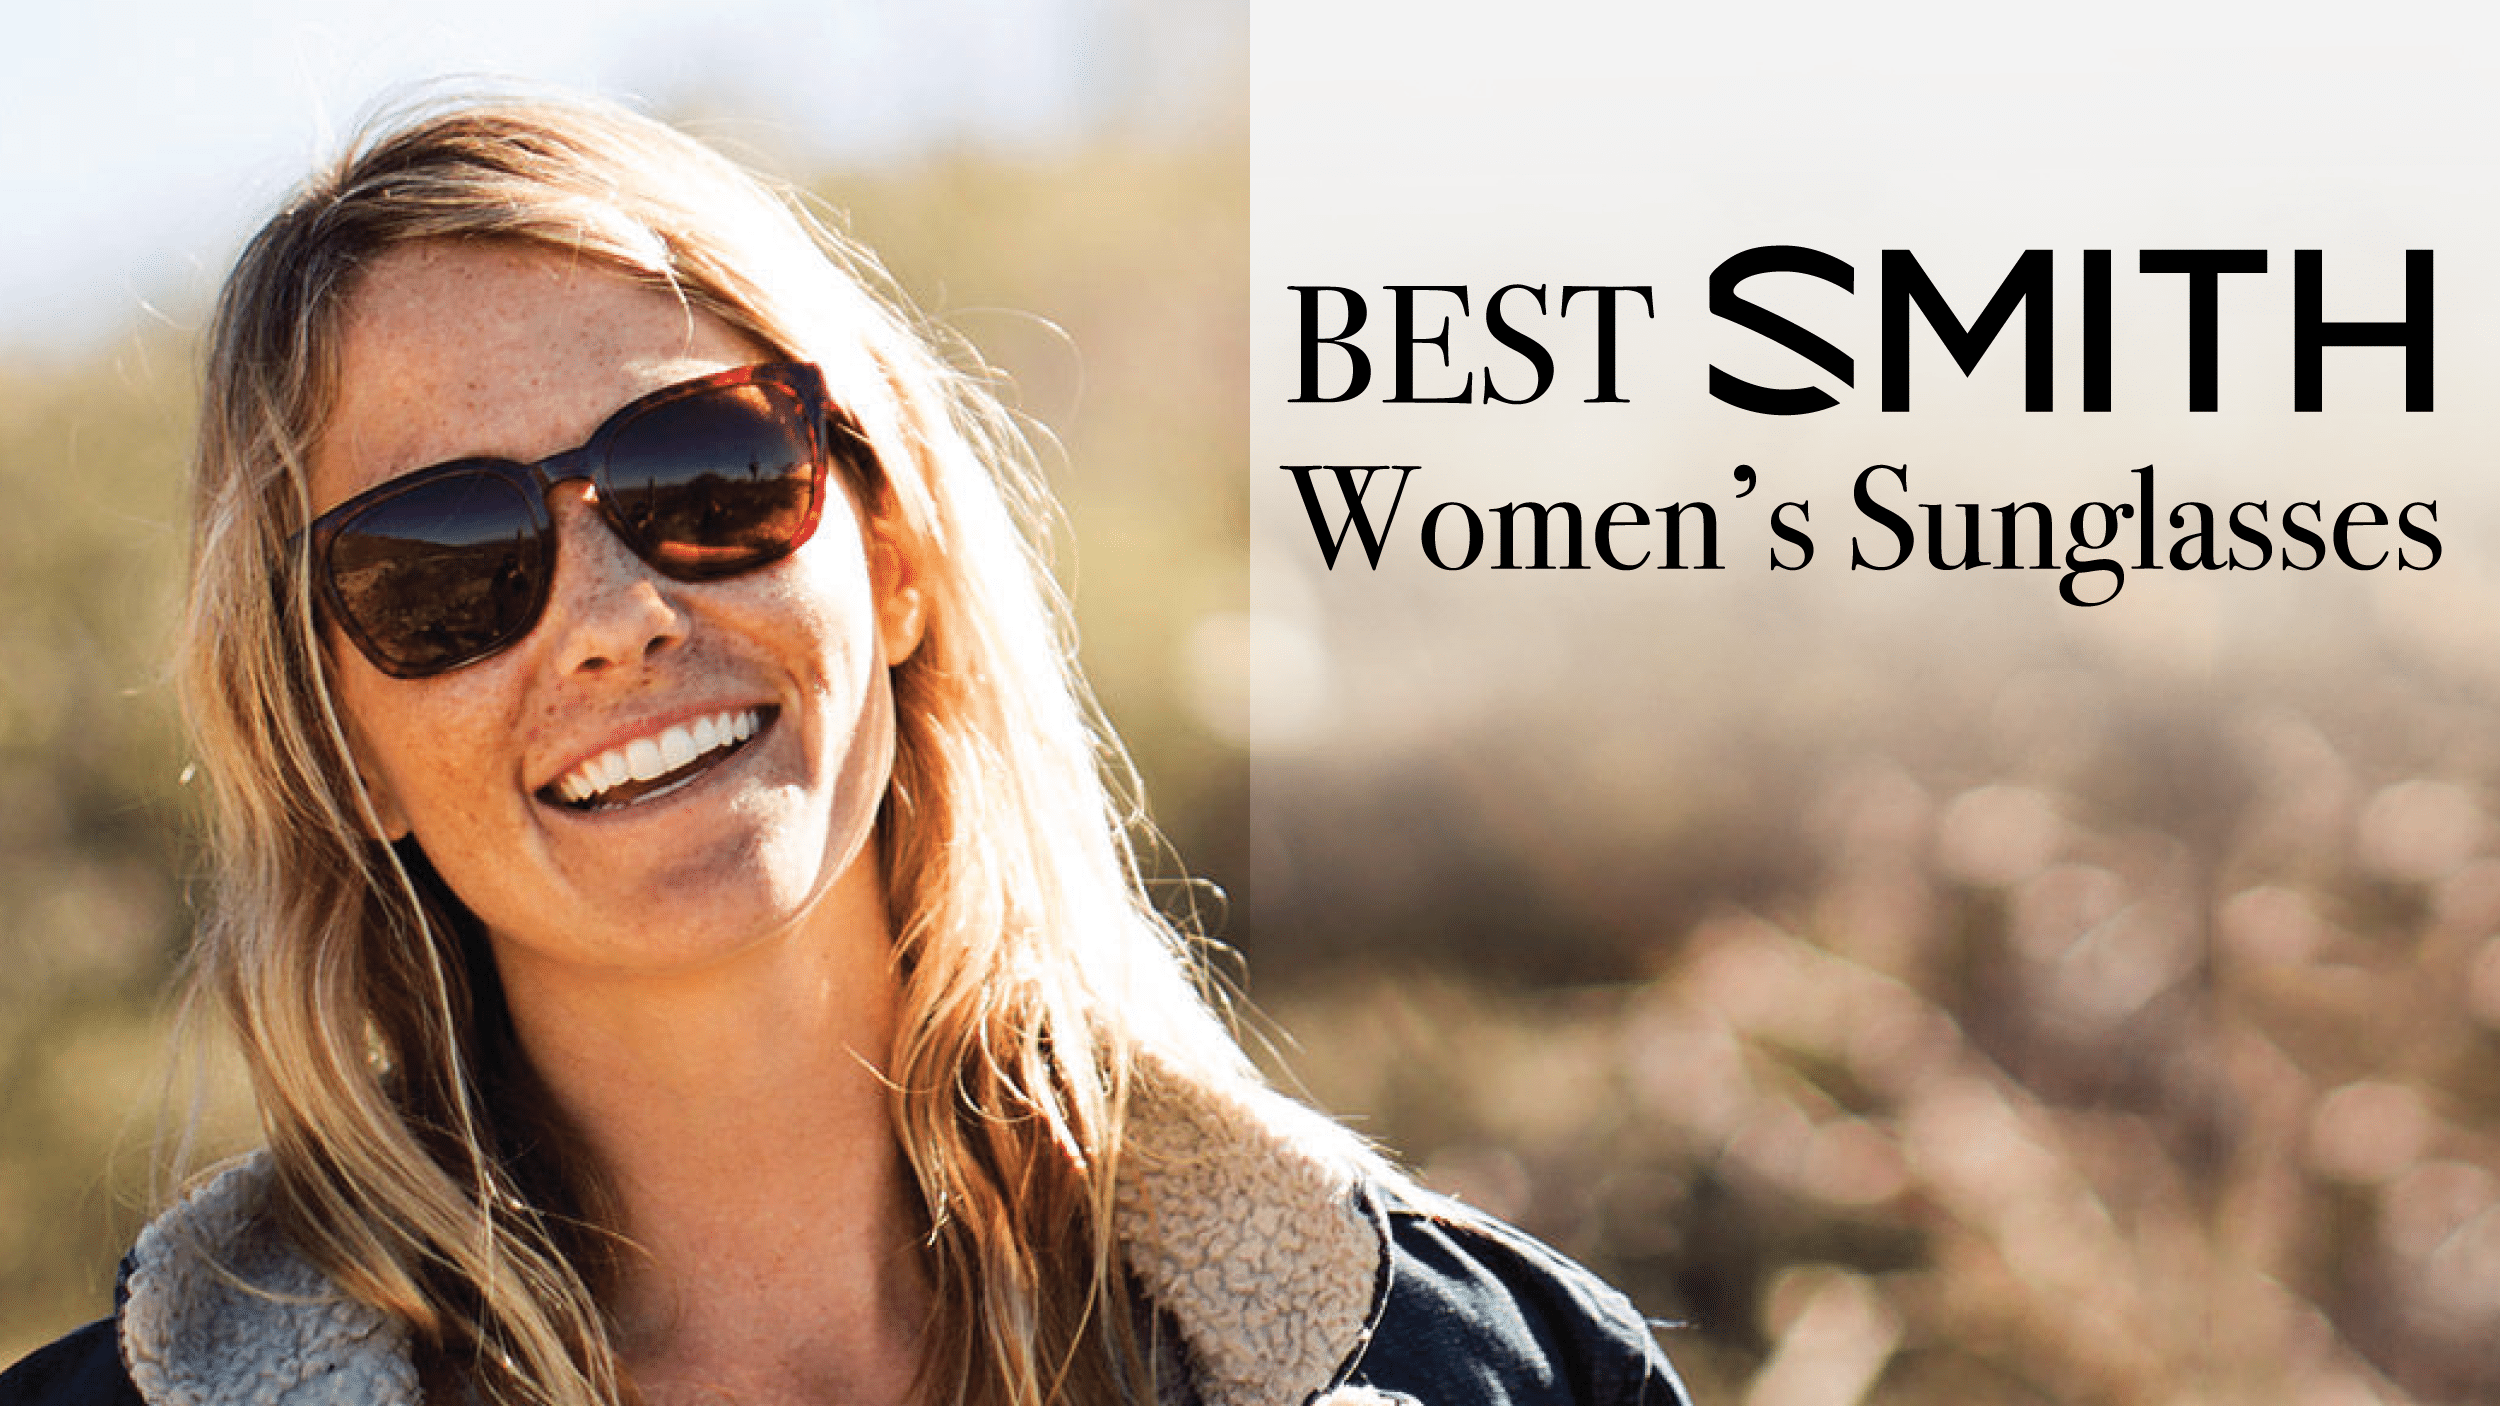 The Best Smith Womens Sunglasses Header